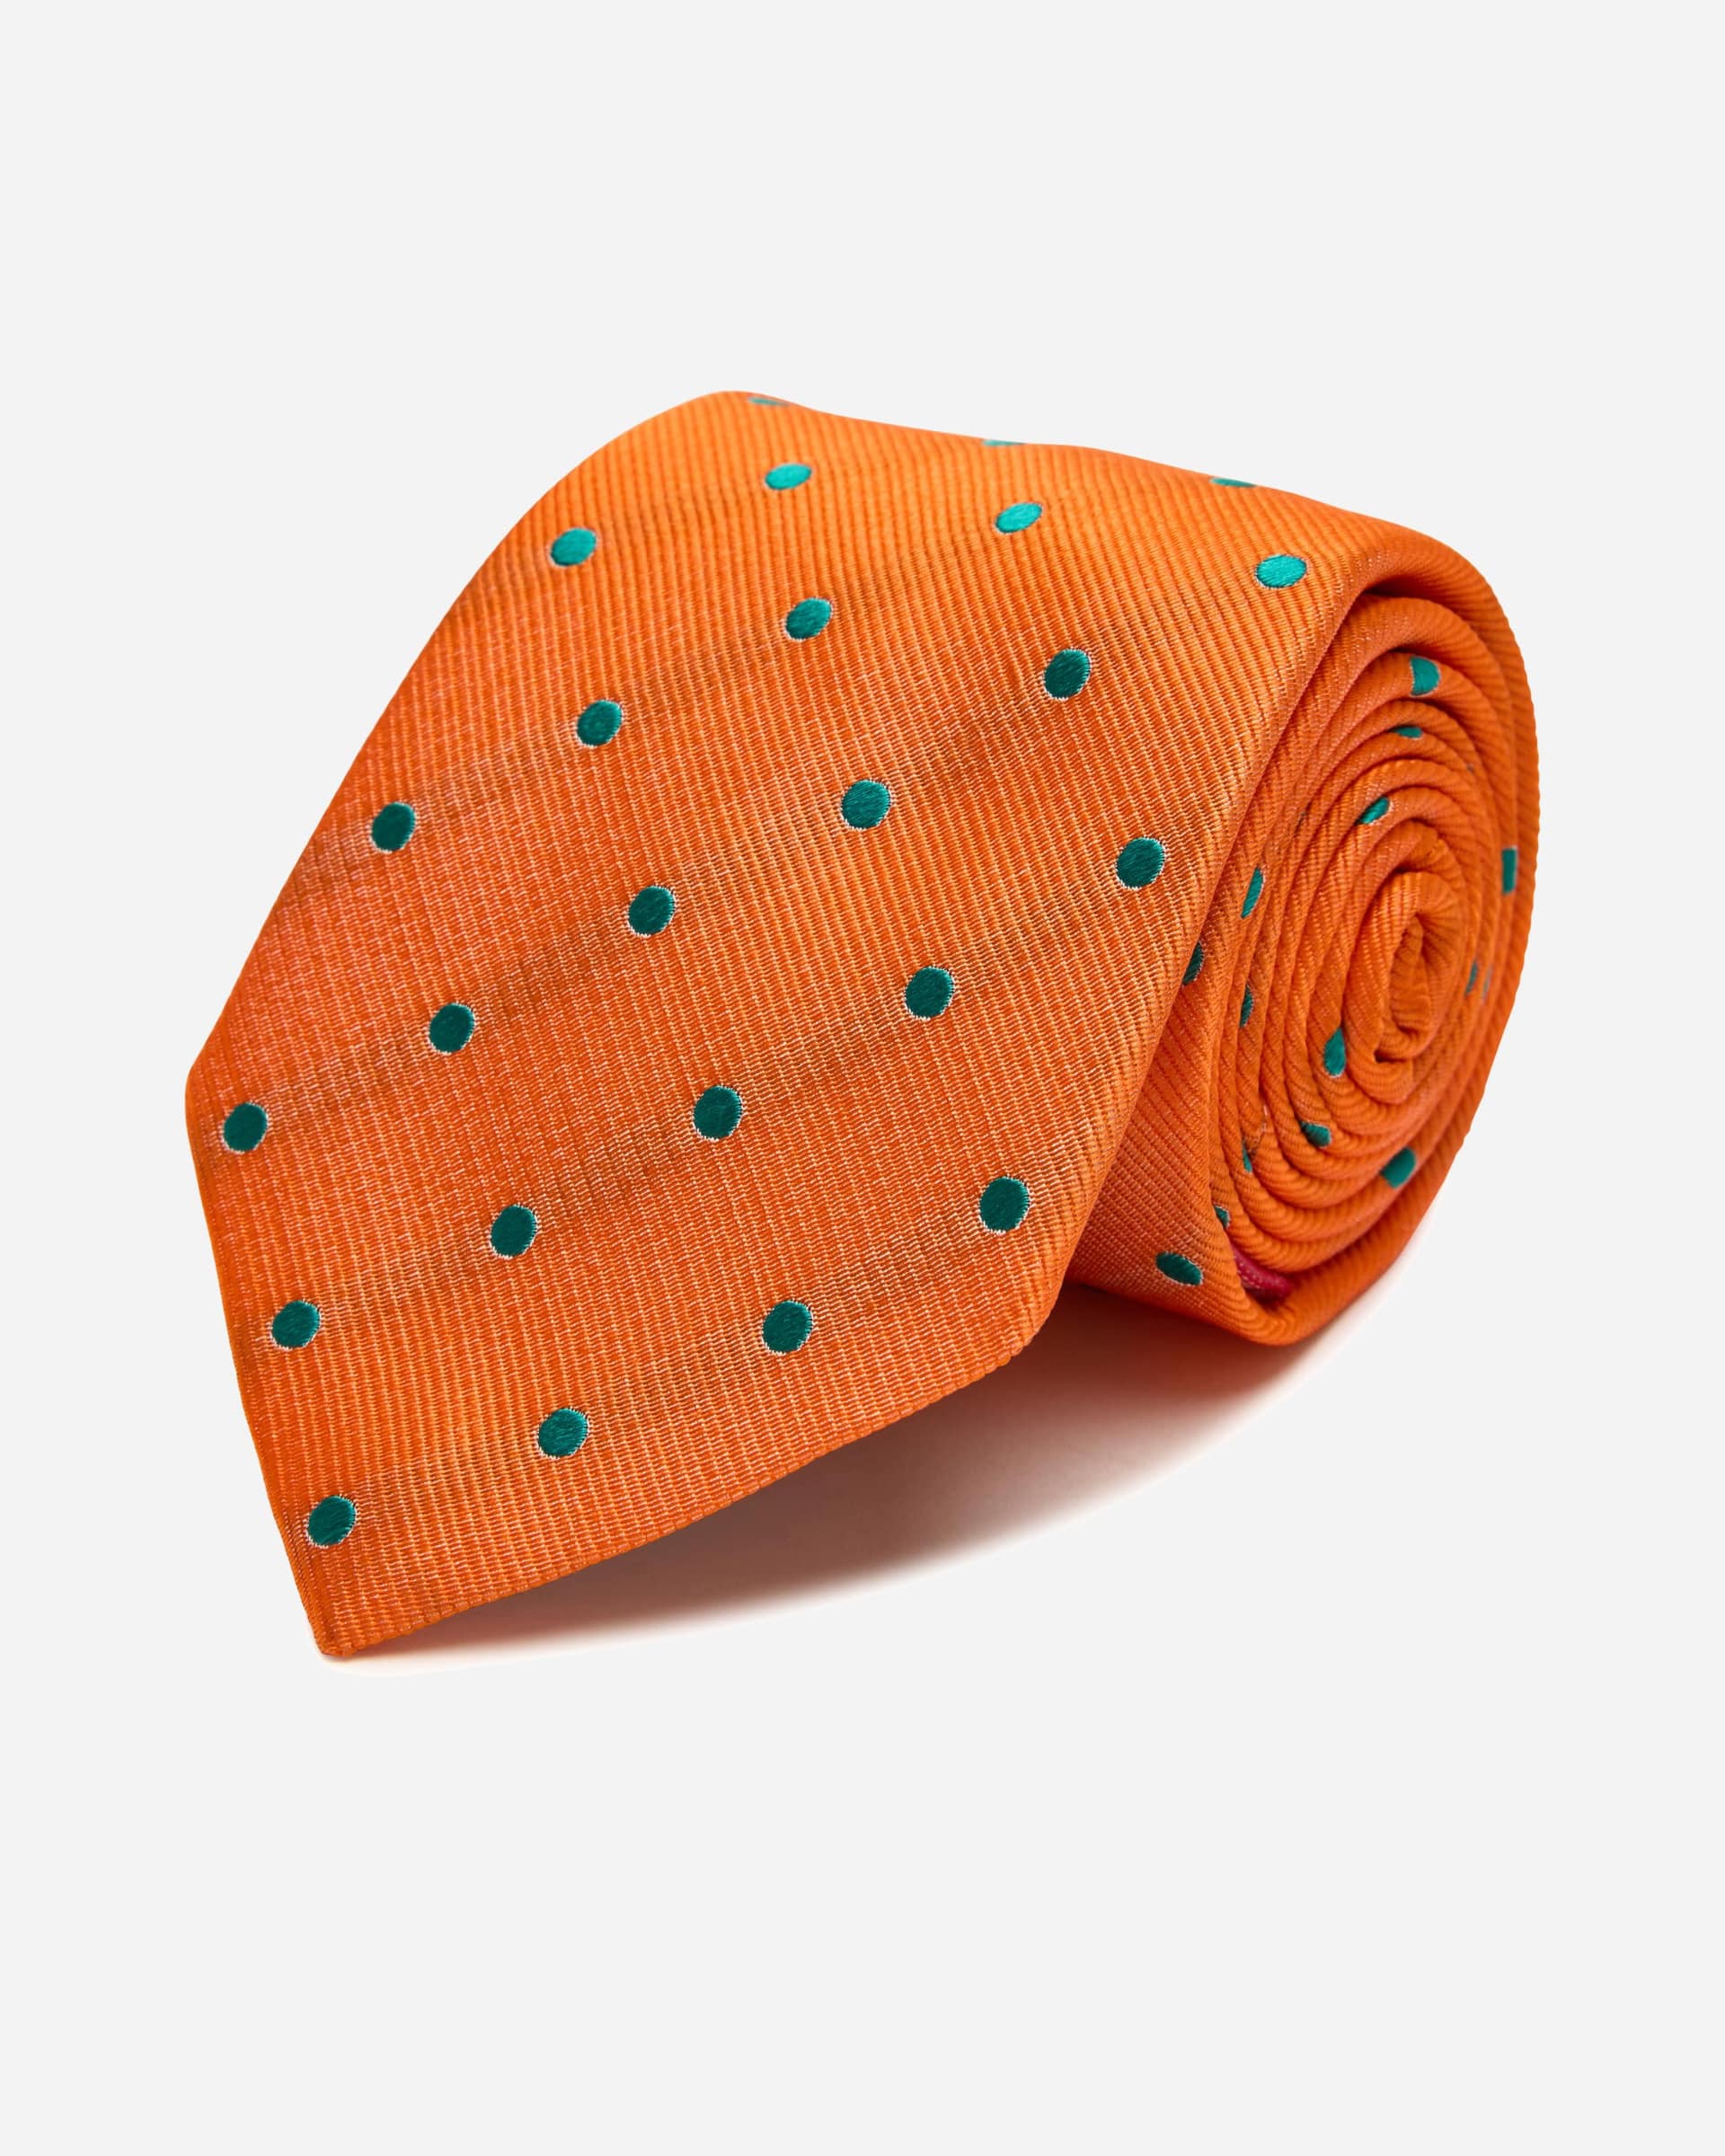 Vista Orange Silk Tie - Men's Ties at Menzclub